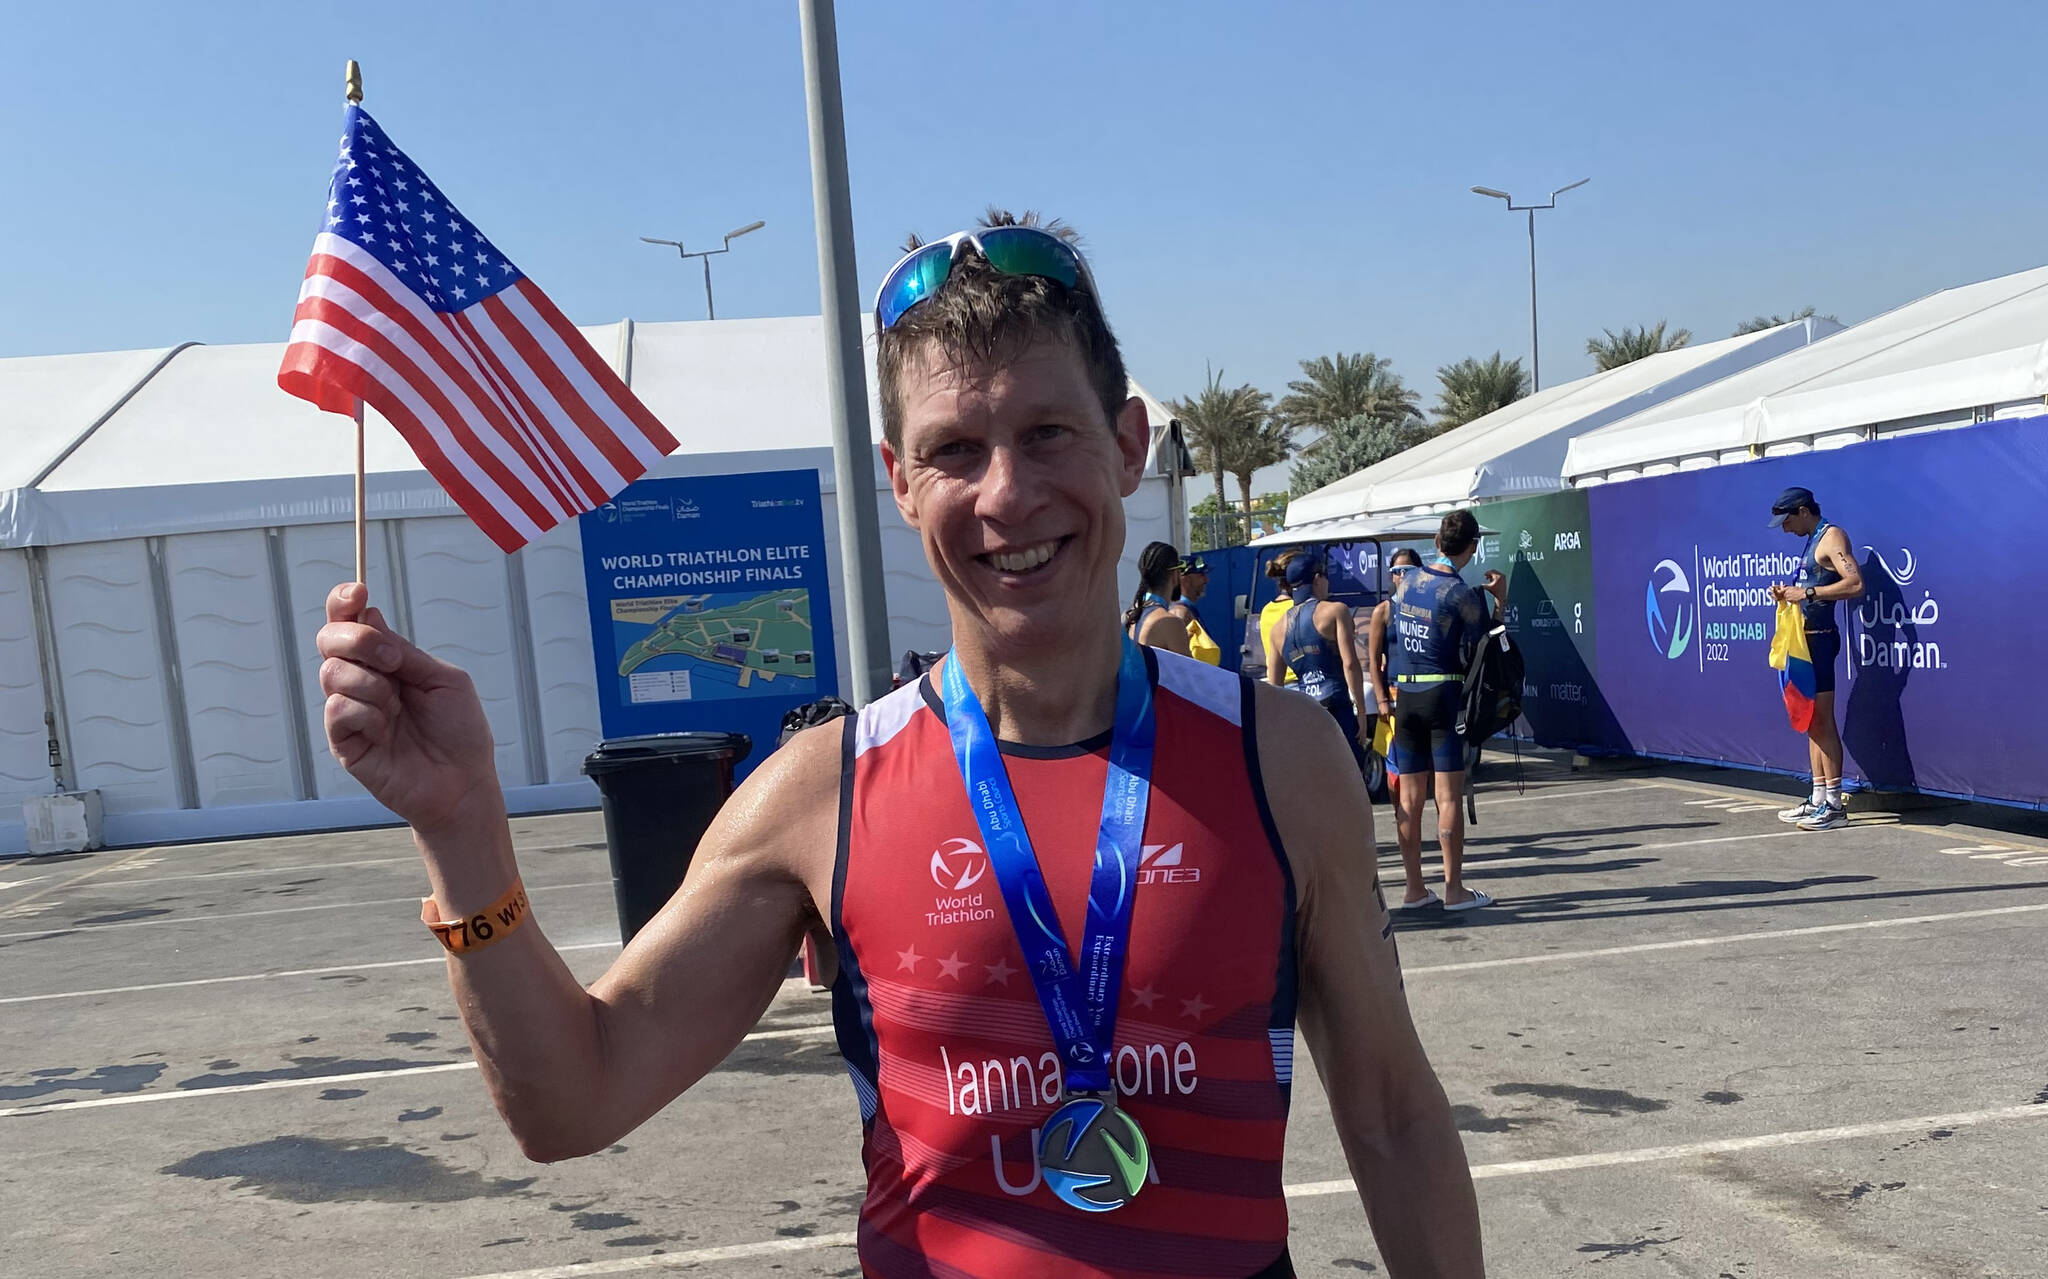 Jon Iannaccone waves an American flag while wearing a medal after completing the World Triathlon Championships in Abu Dhabi, United Arab Emirates, Nov. 26, 2022. (Photo courtesy Jon Iannaccone)